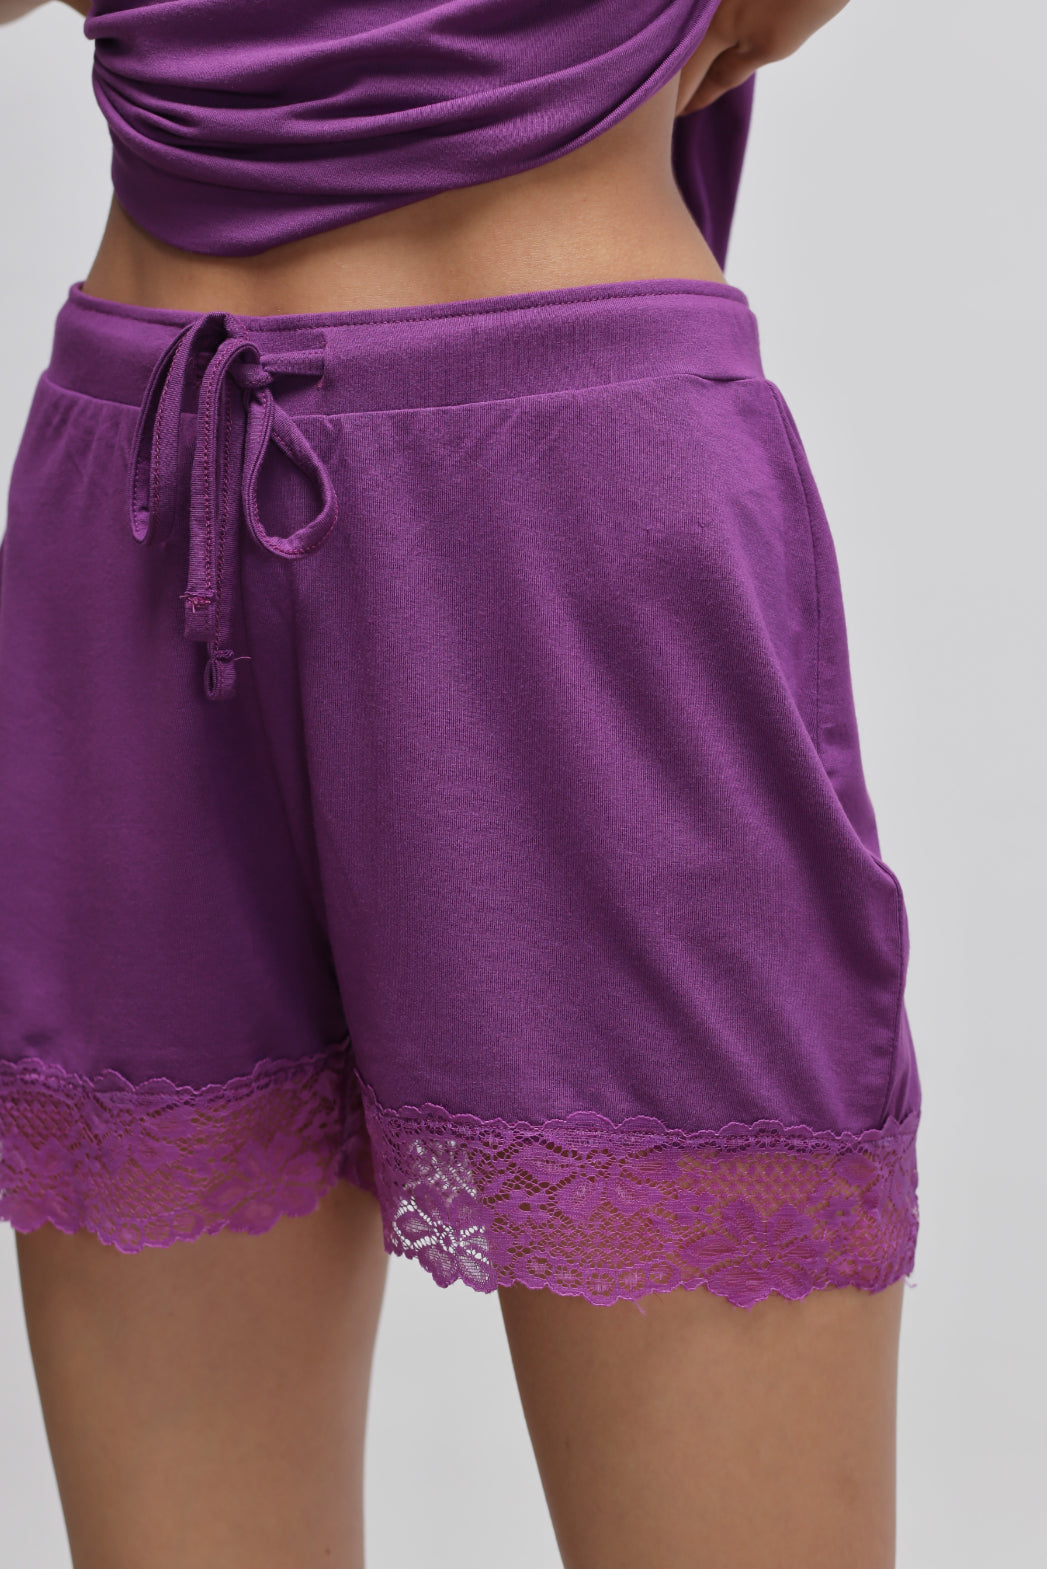 Dreamy Purple Lace Shorts Set